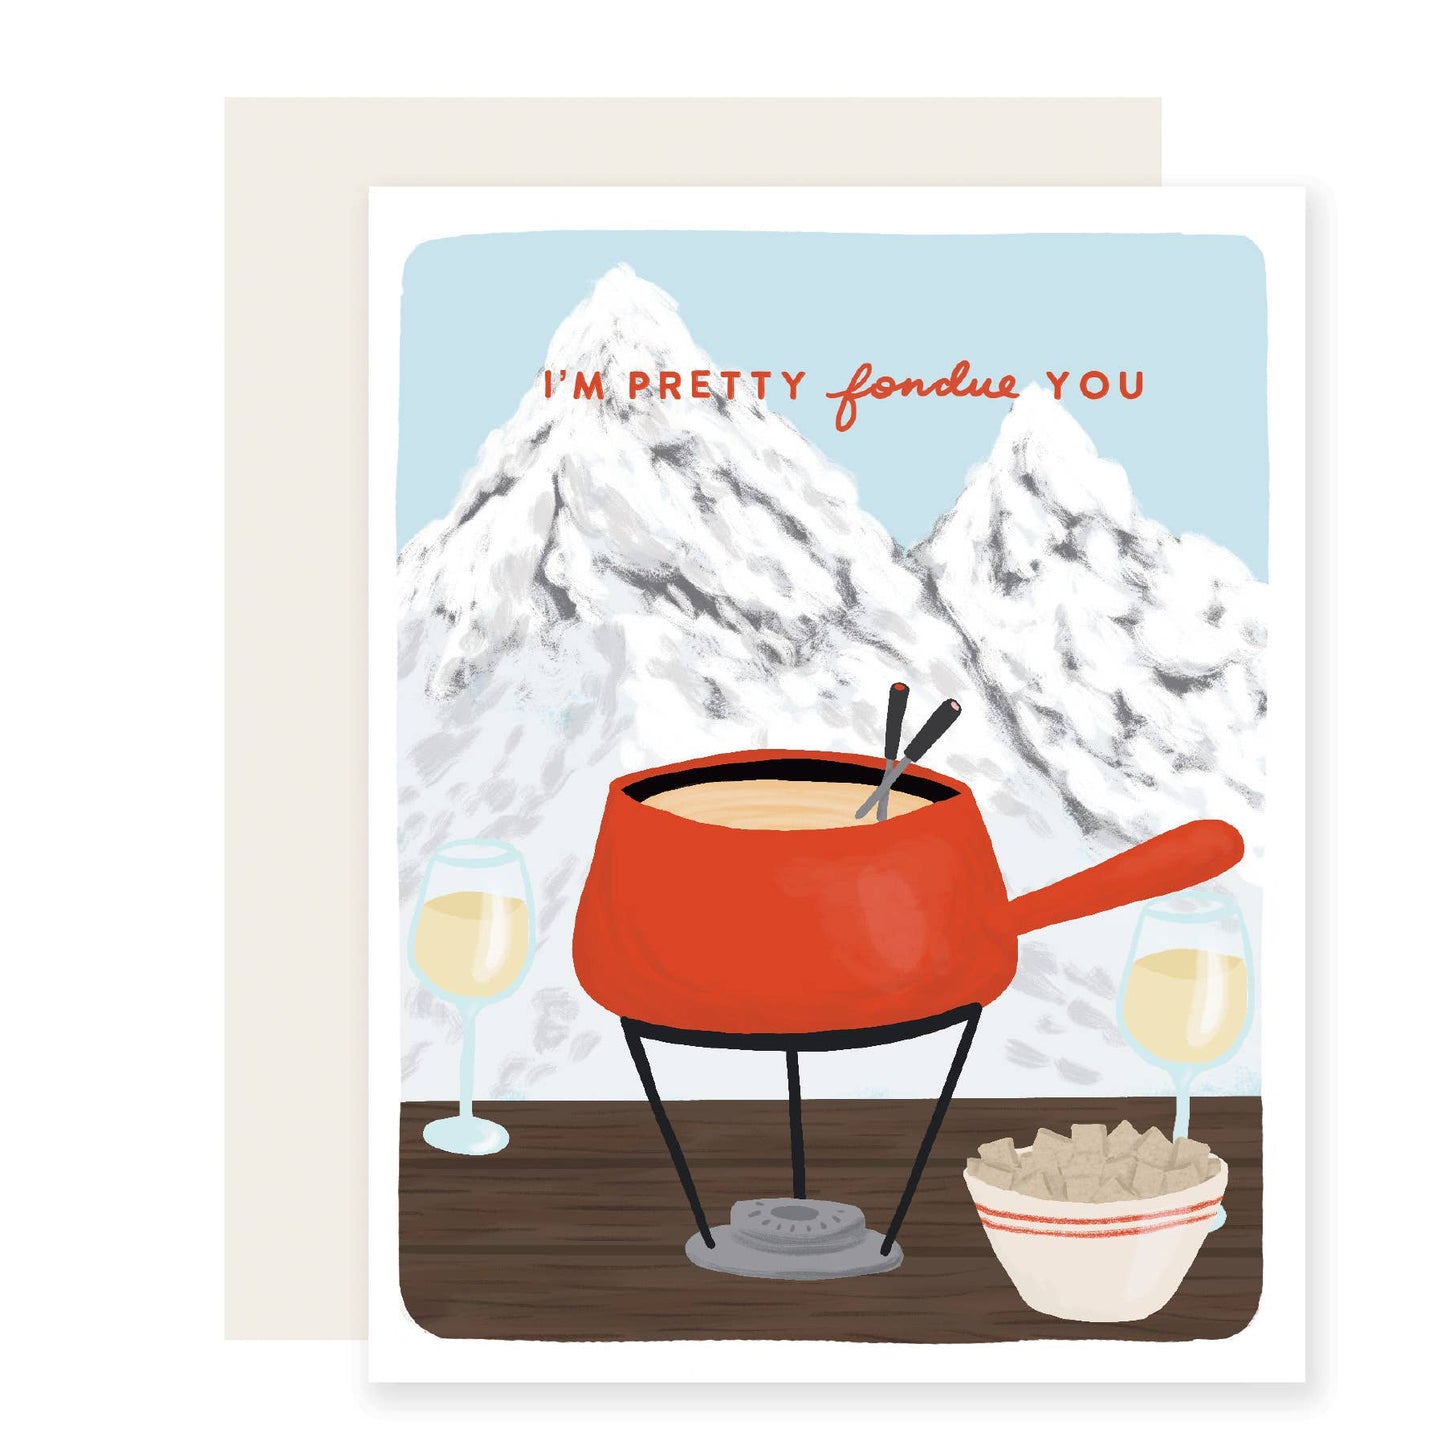 Fondue pot greeting card that reads "I'm pretty fondue you" 